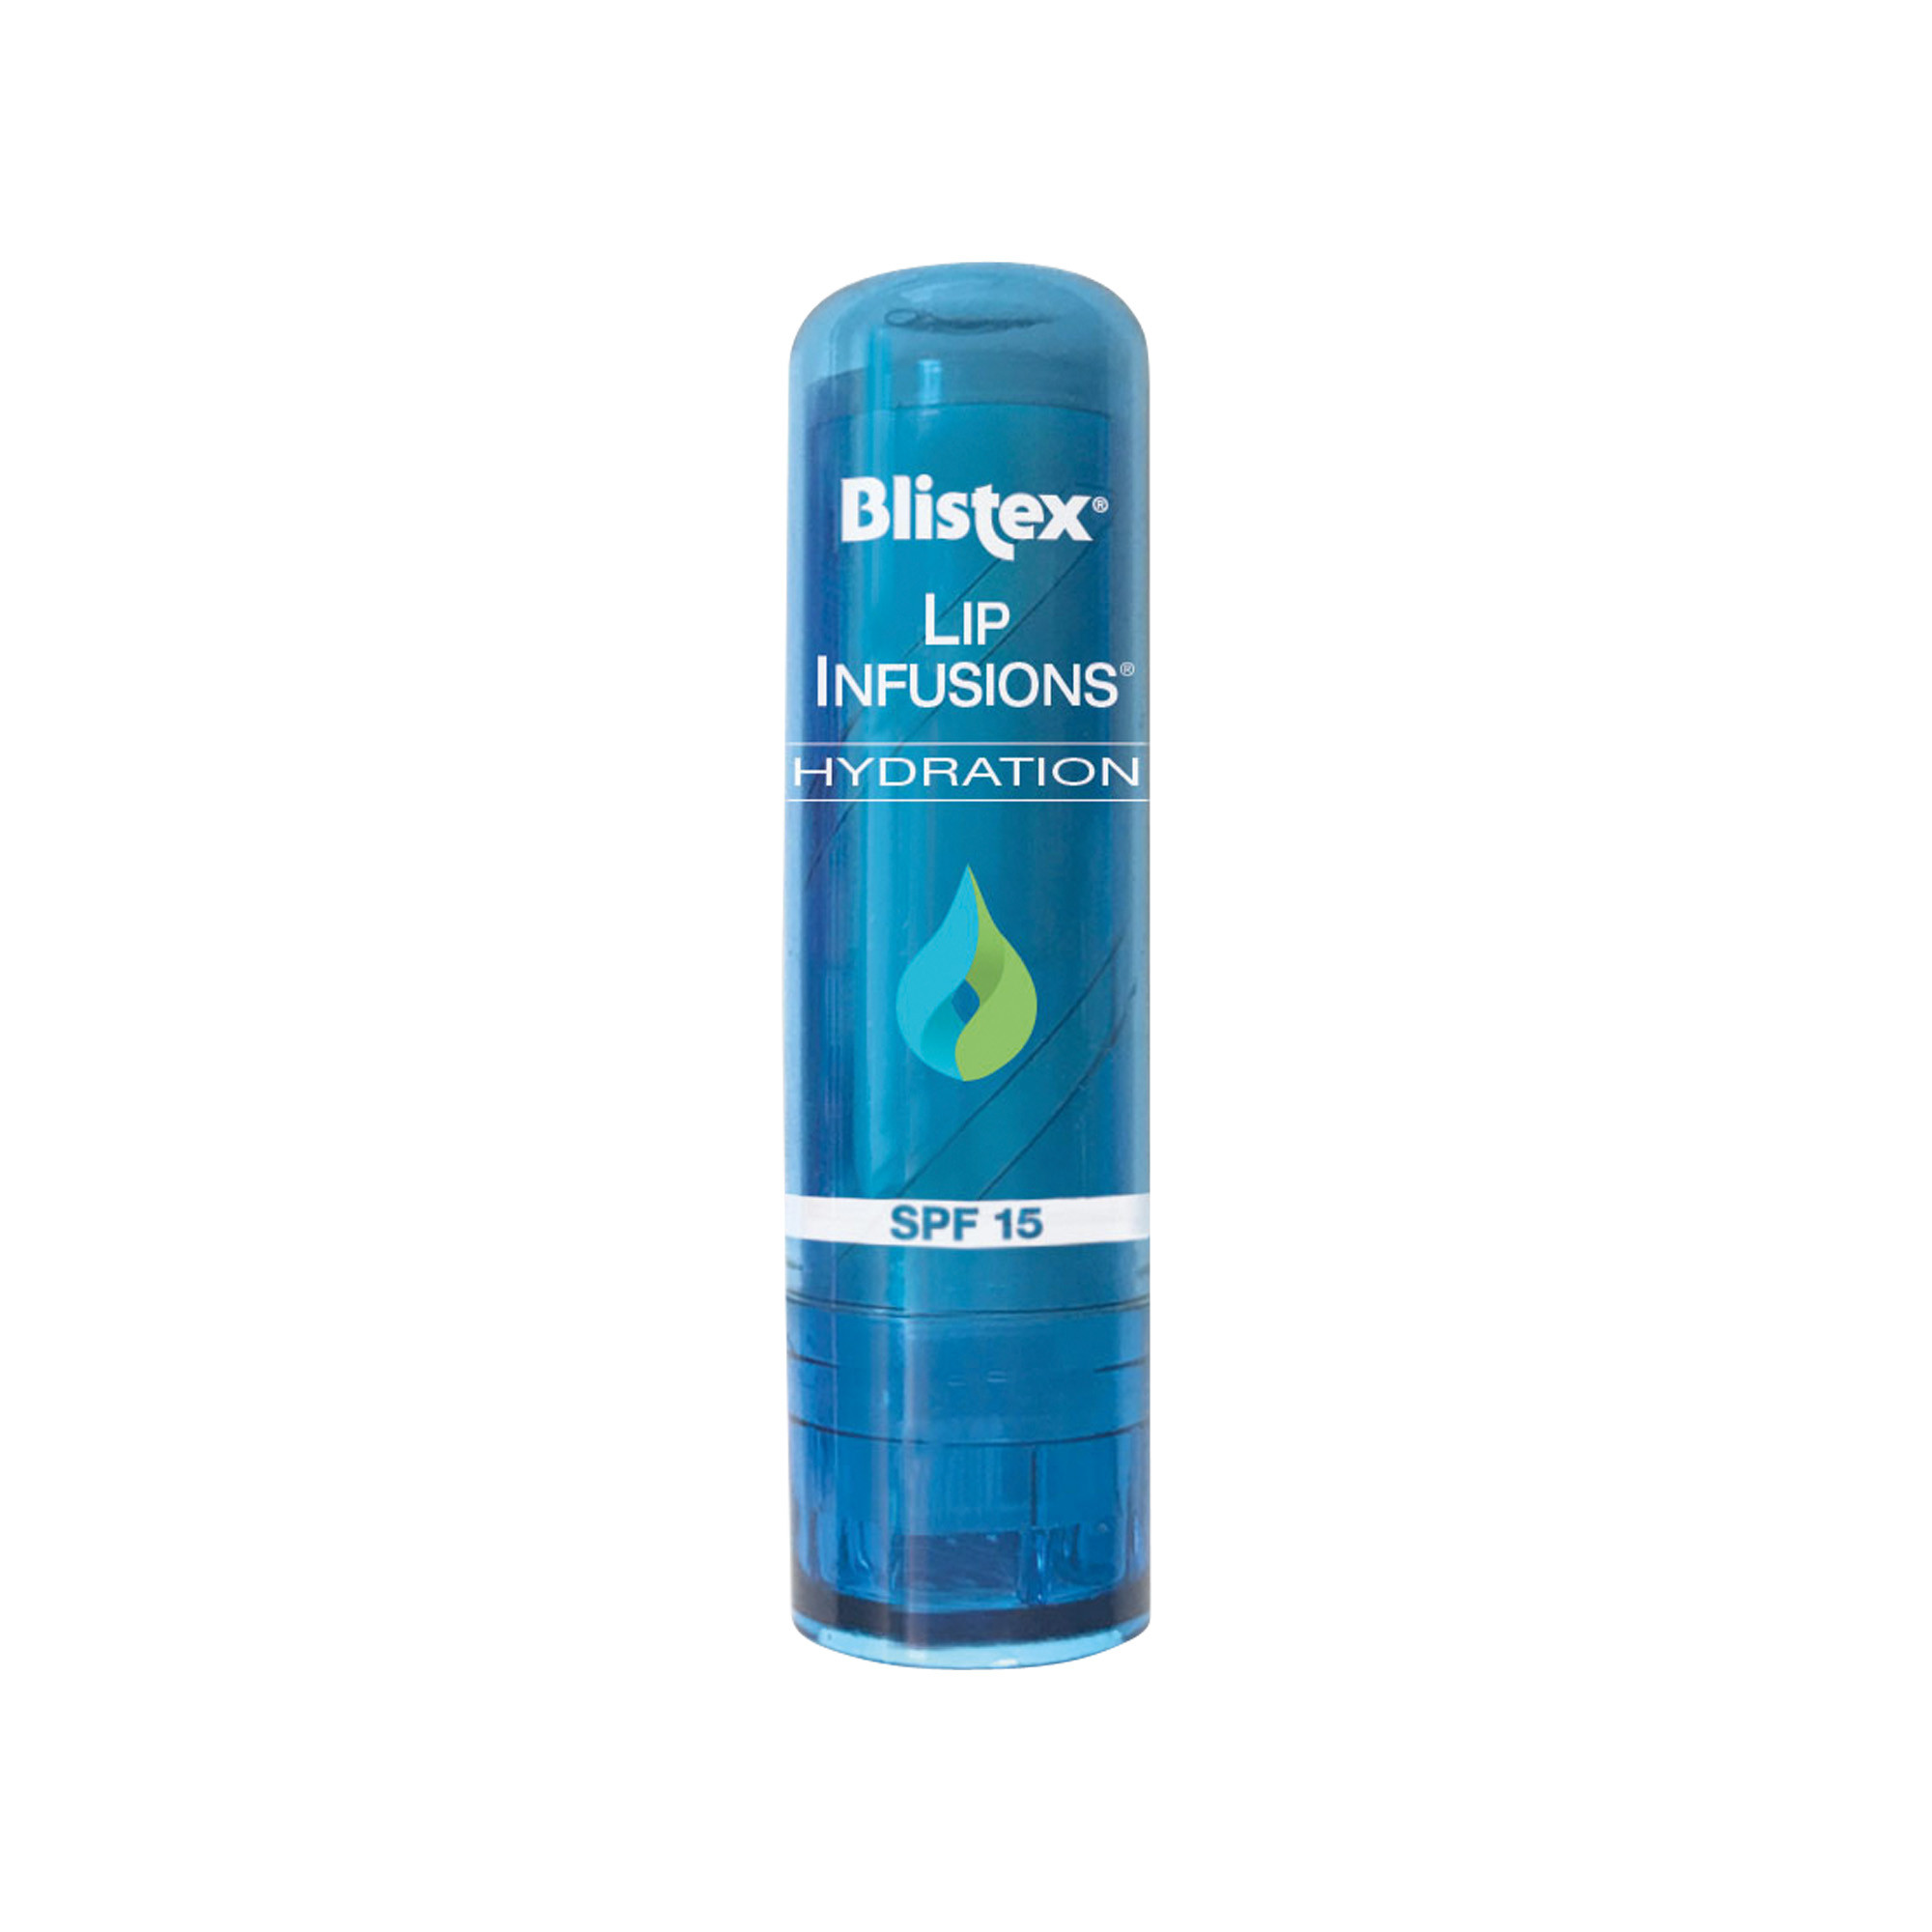 Blistex Lip Infusions Hydration stick 24H moisturiser